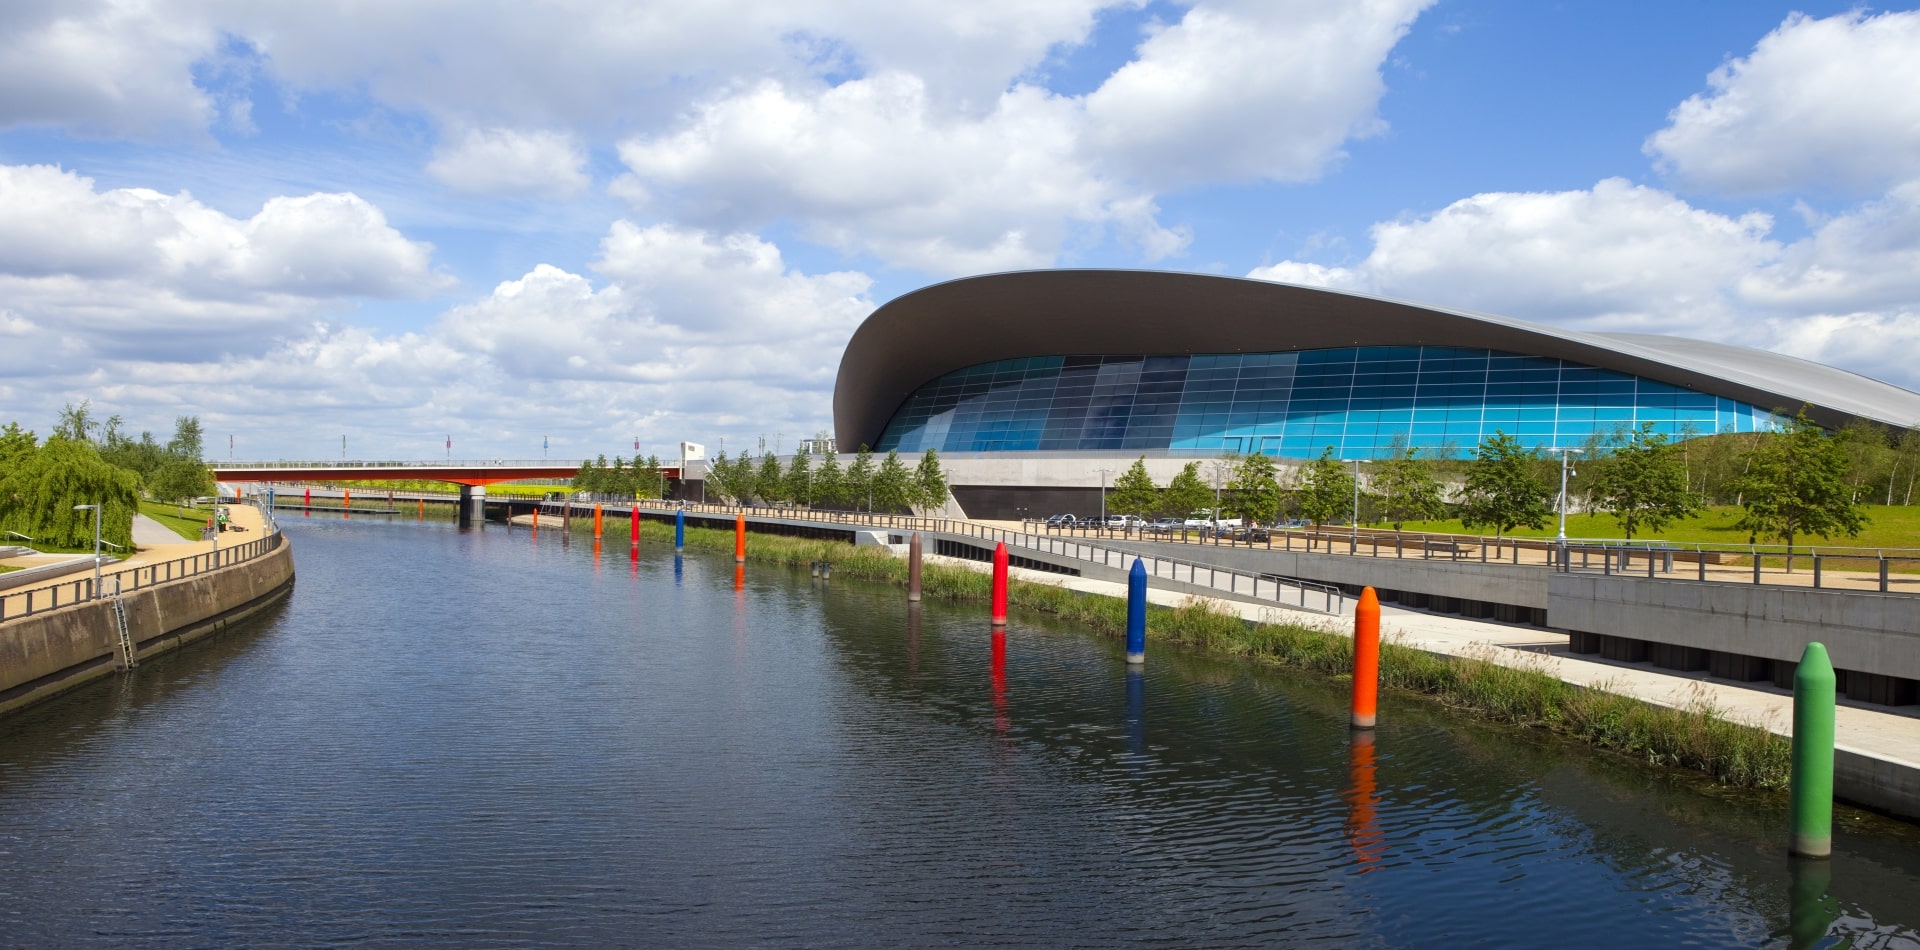 Aquatics Centre in the Queen Elizabeth Olympic Park in London